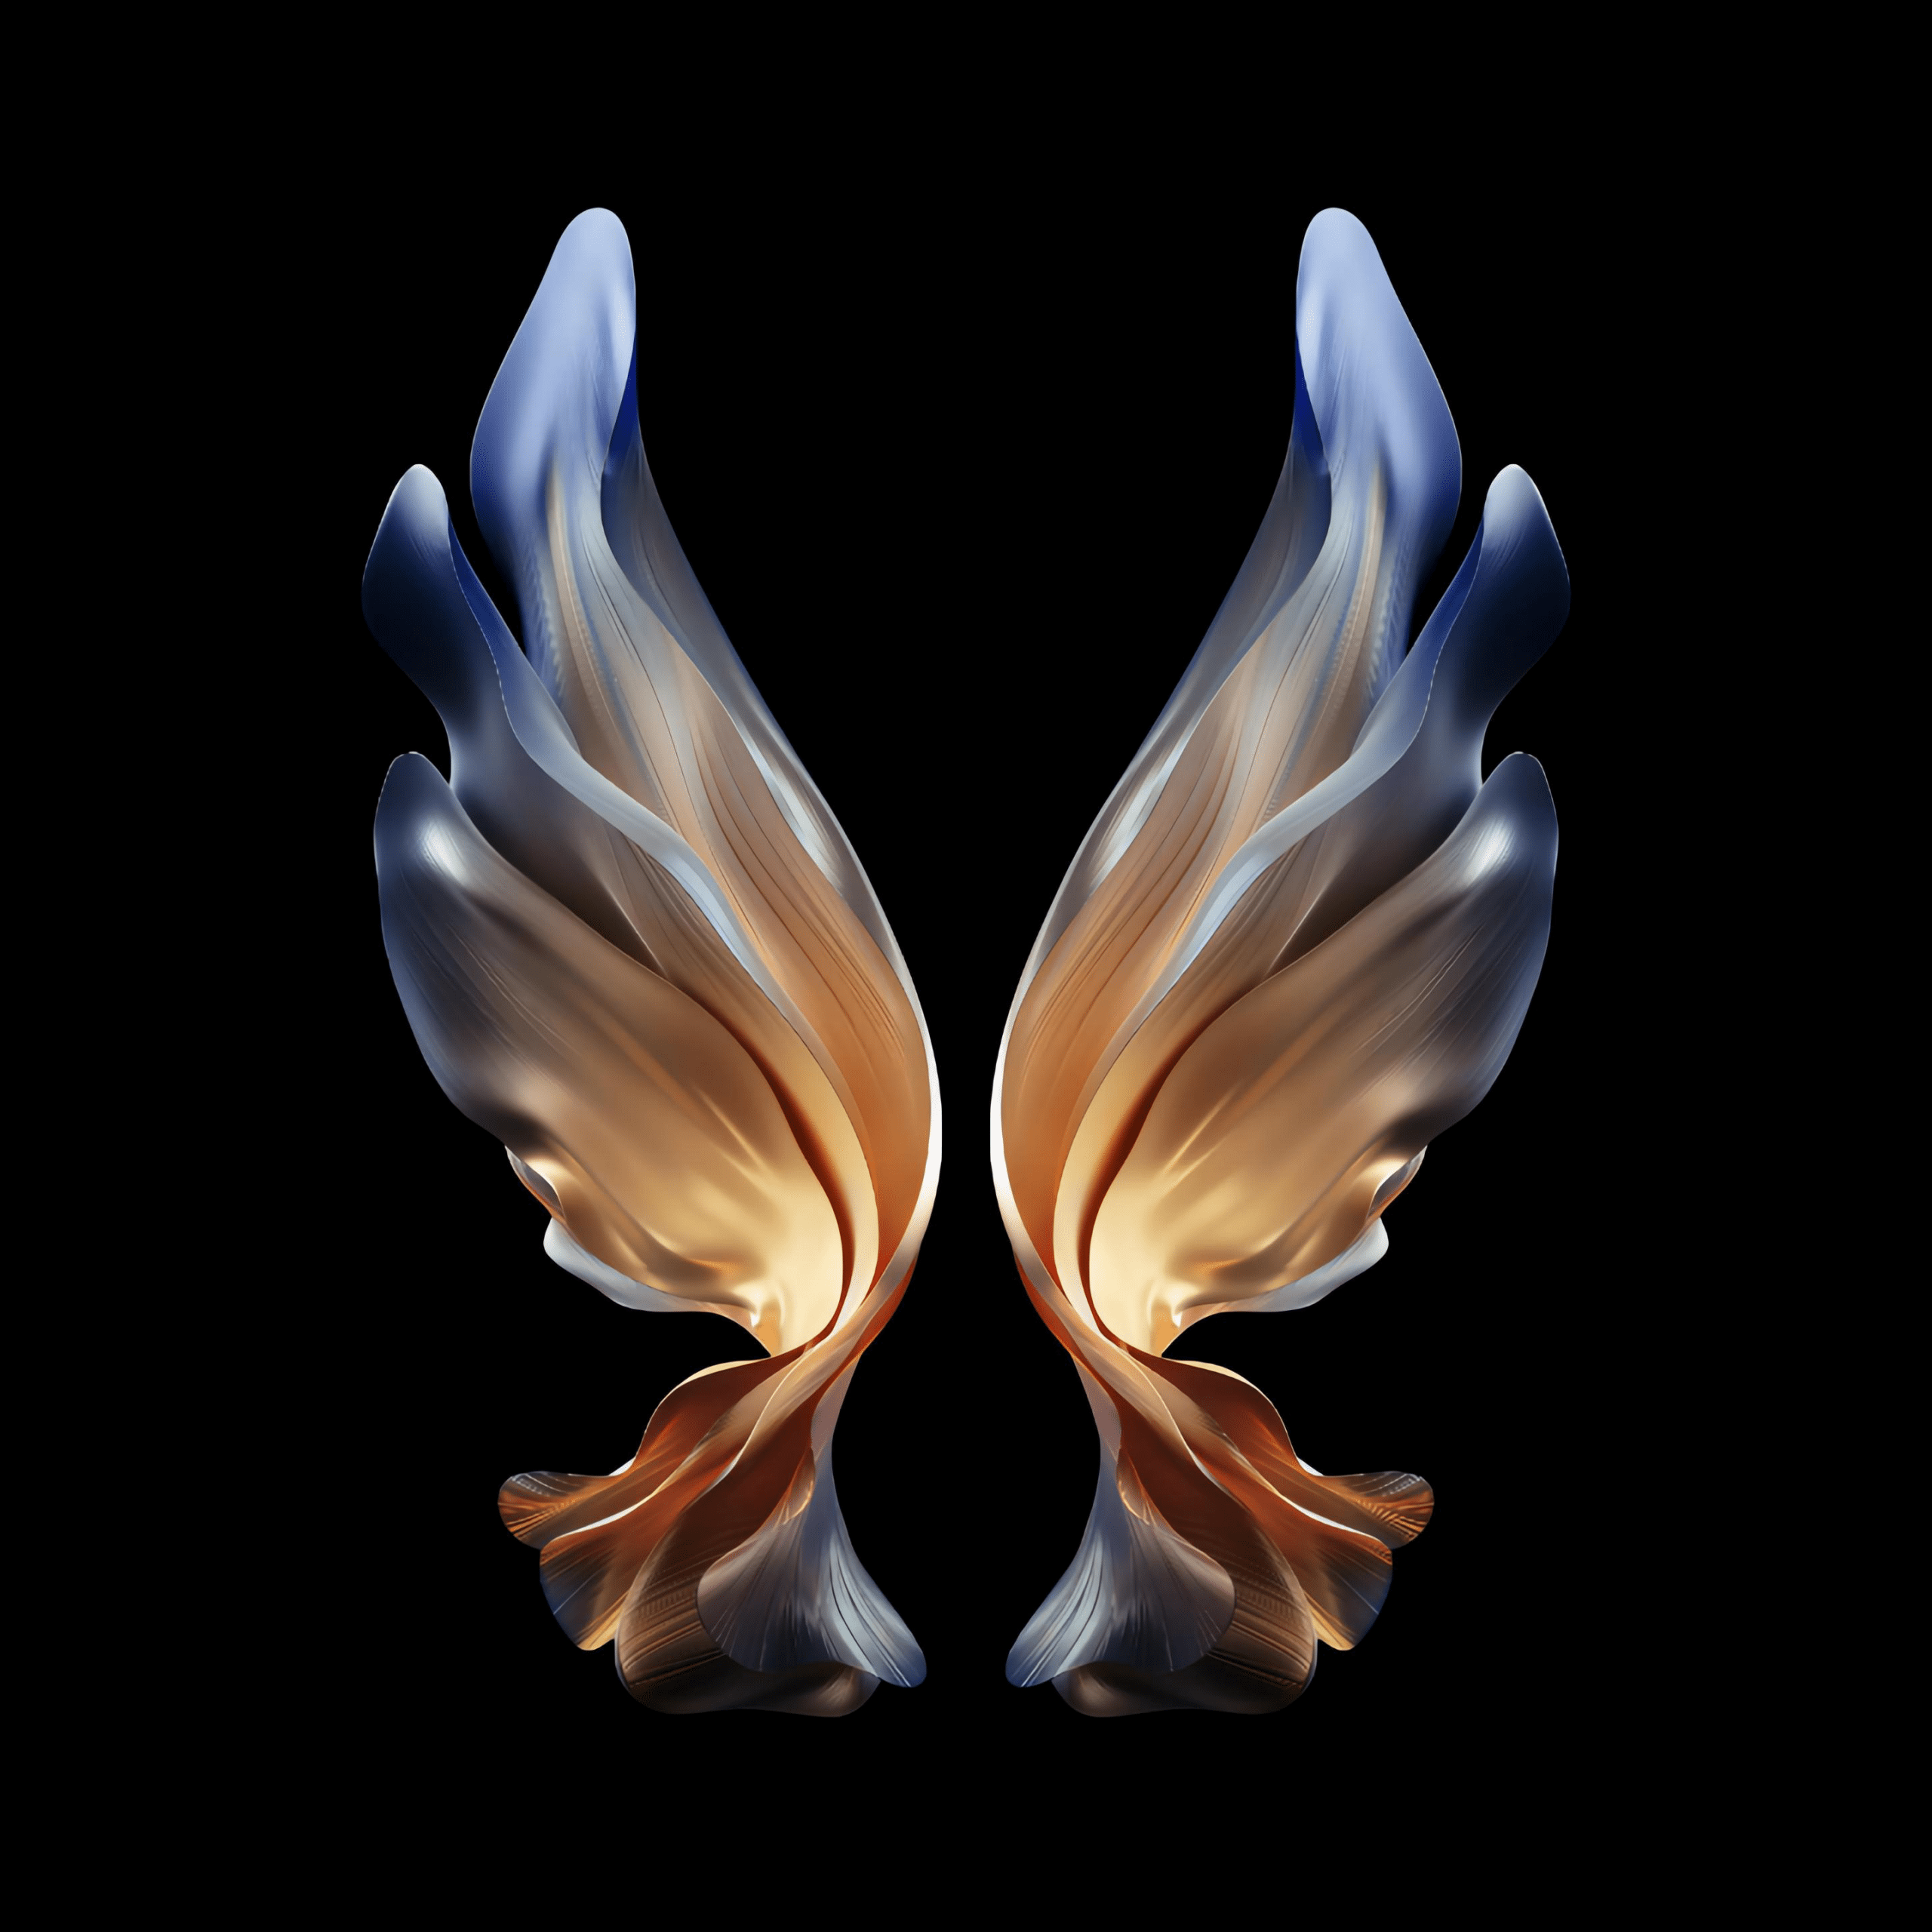 A pair of blue and orange wings - Wings